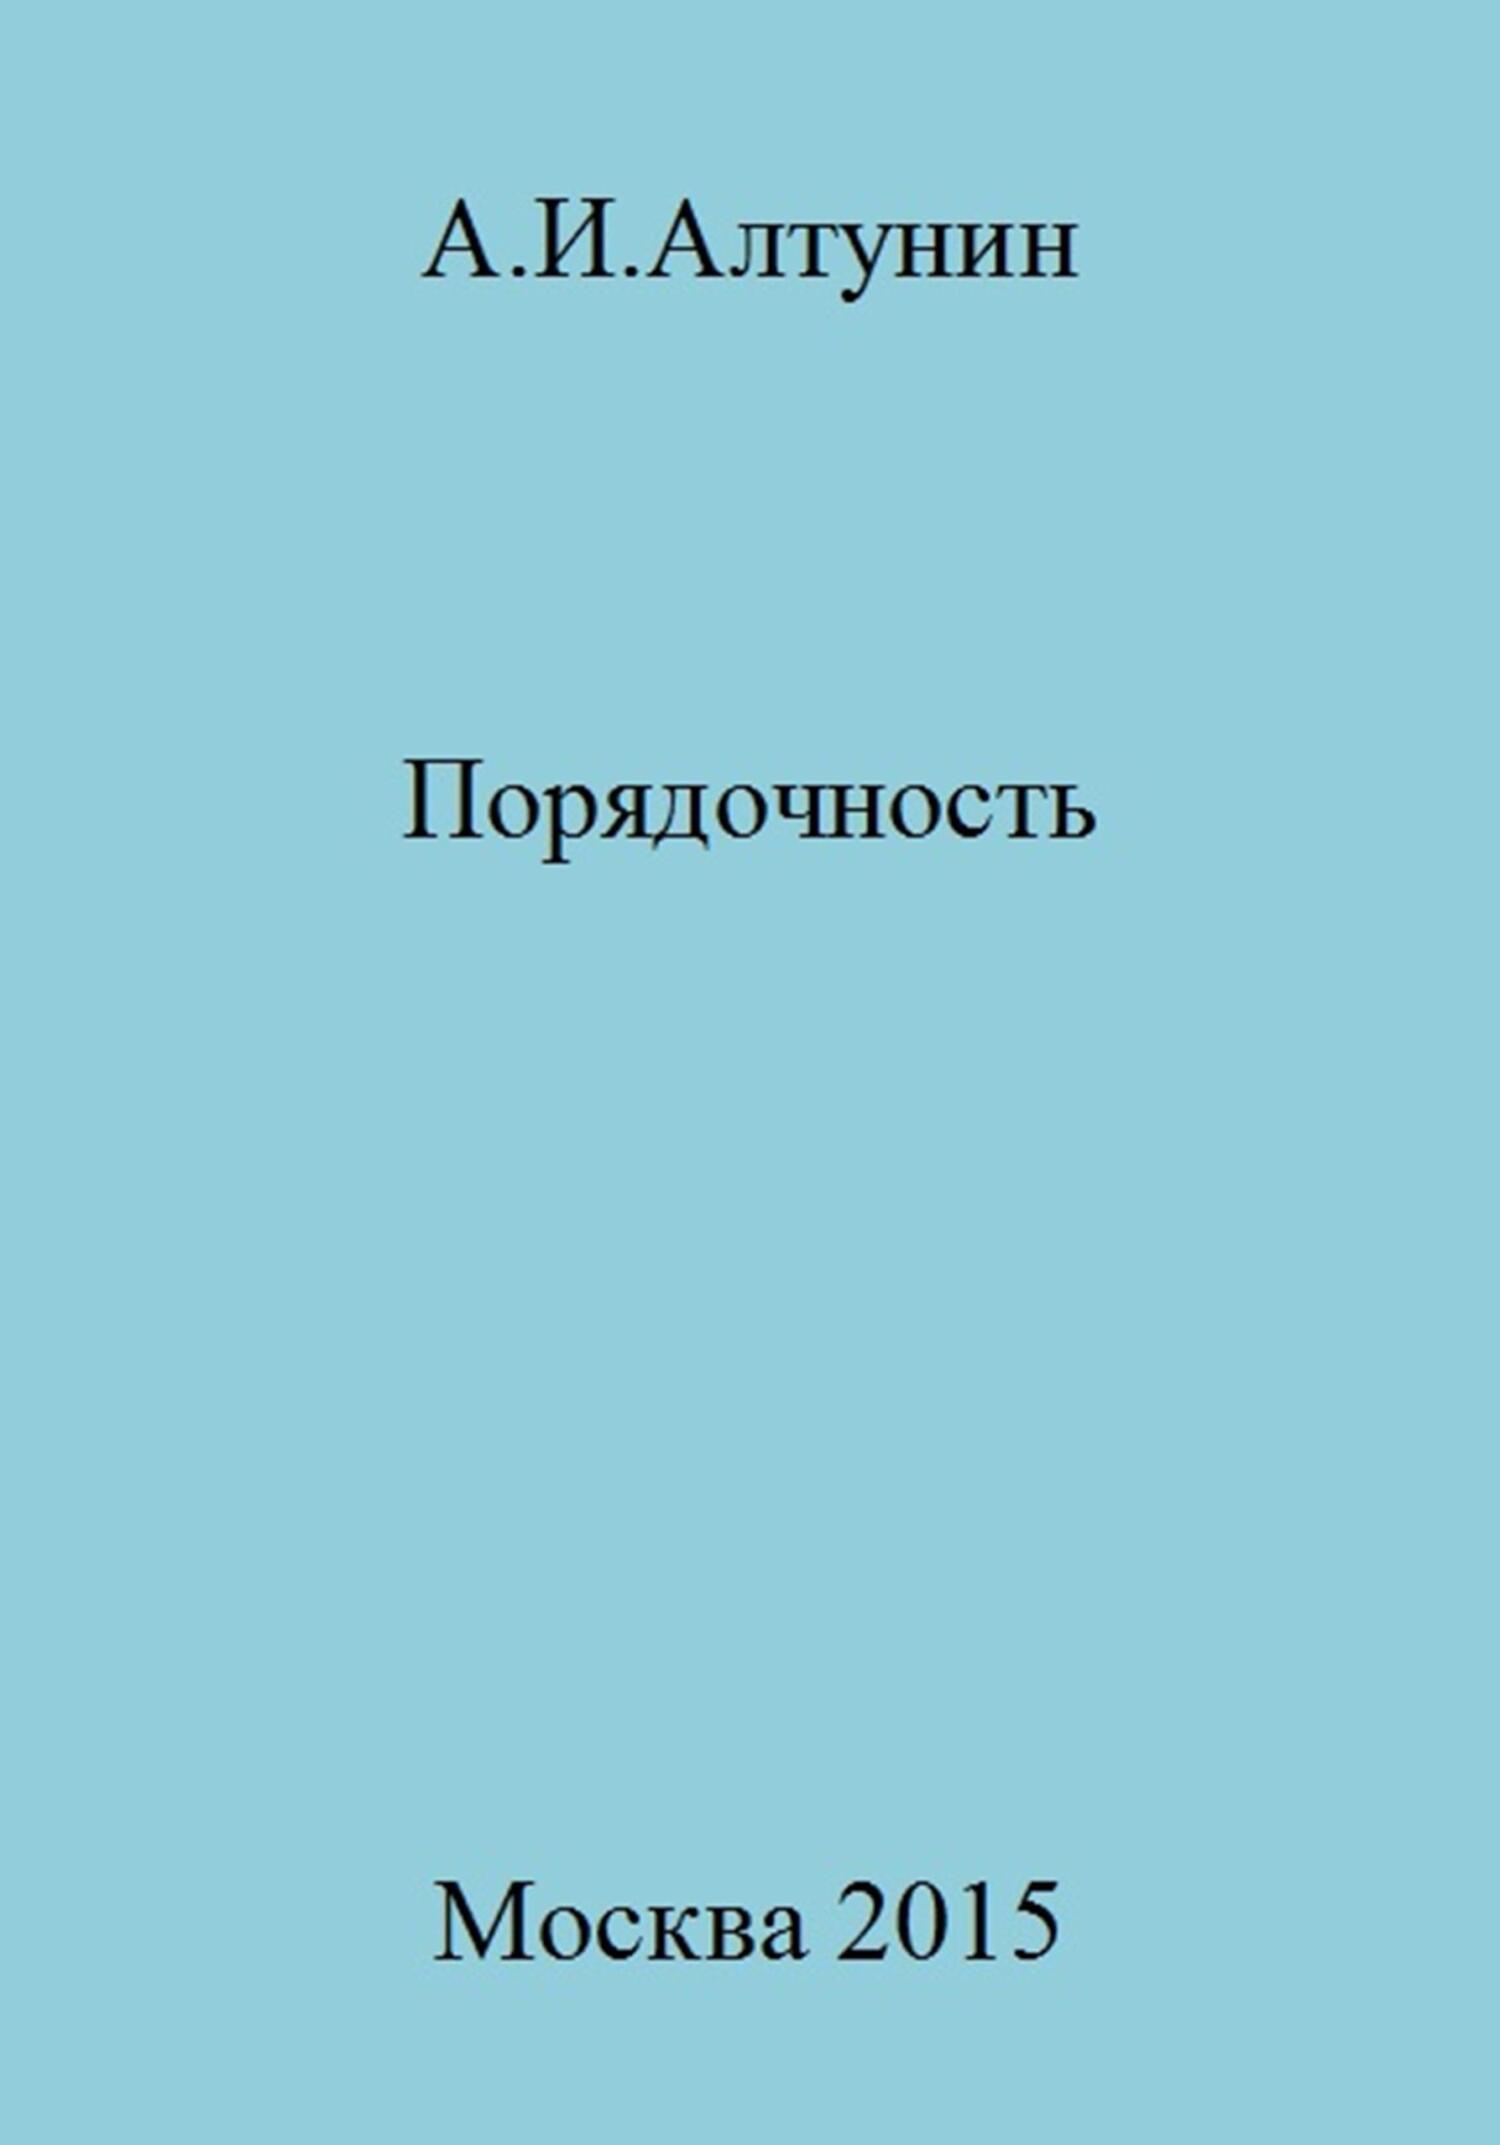 Порядочность - Александр Иванович Алтунин